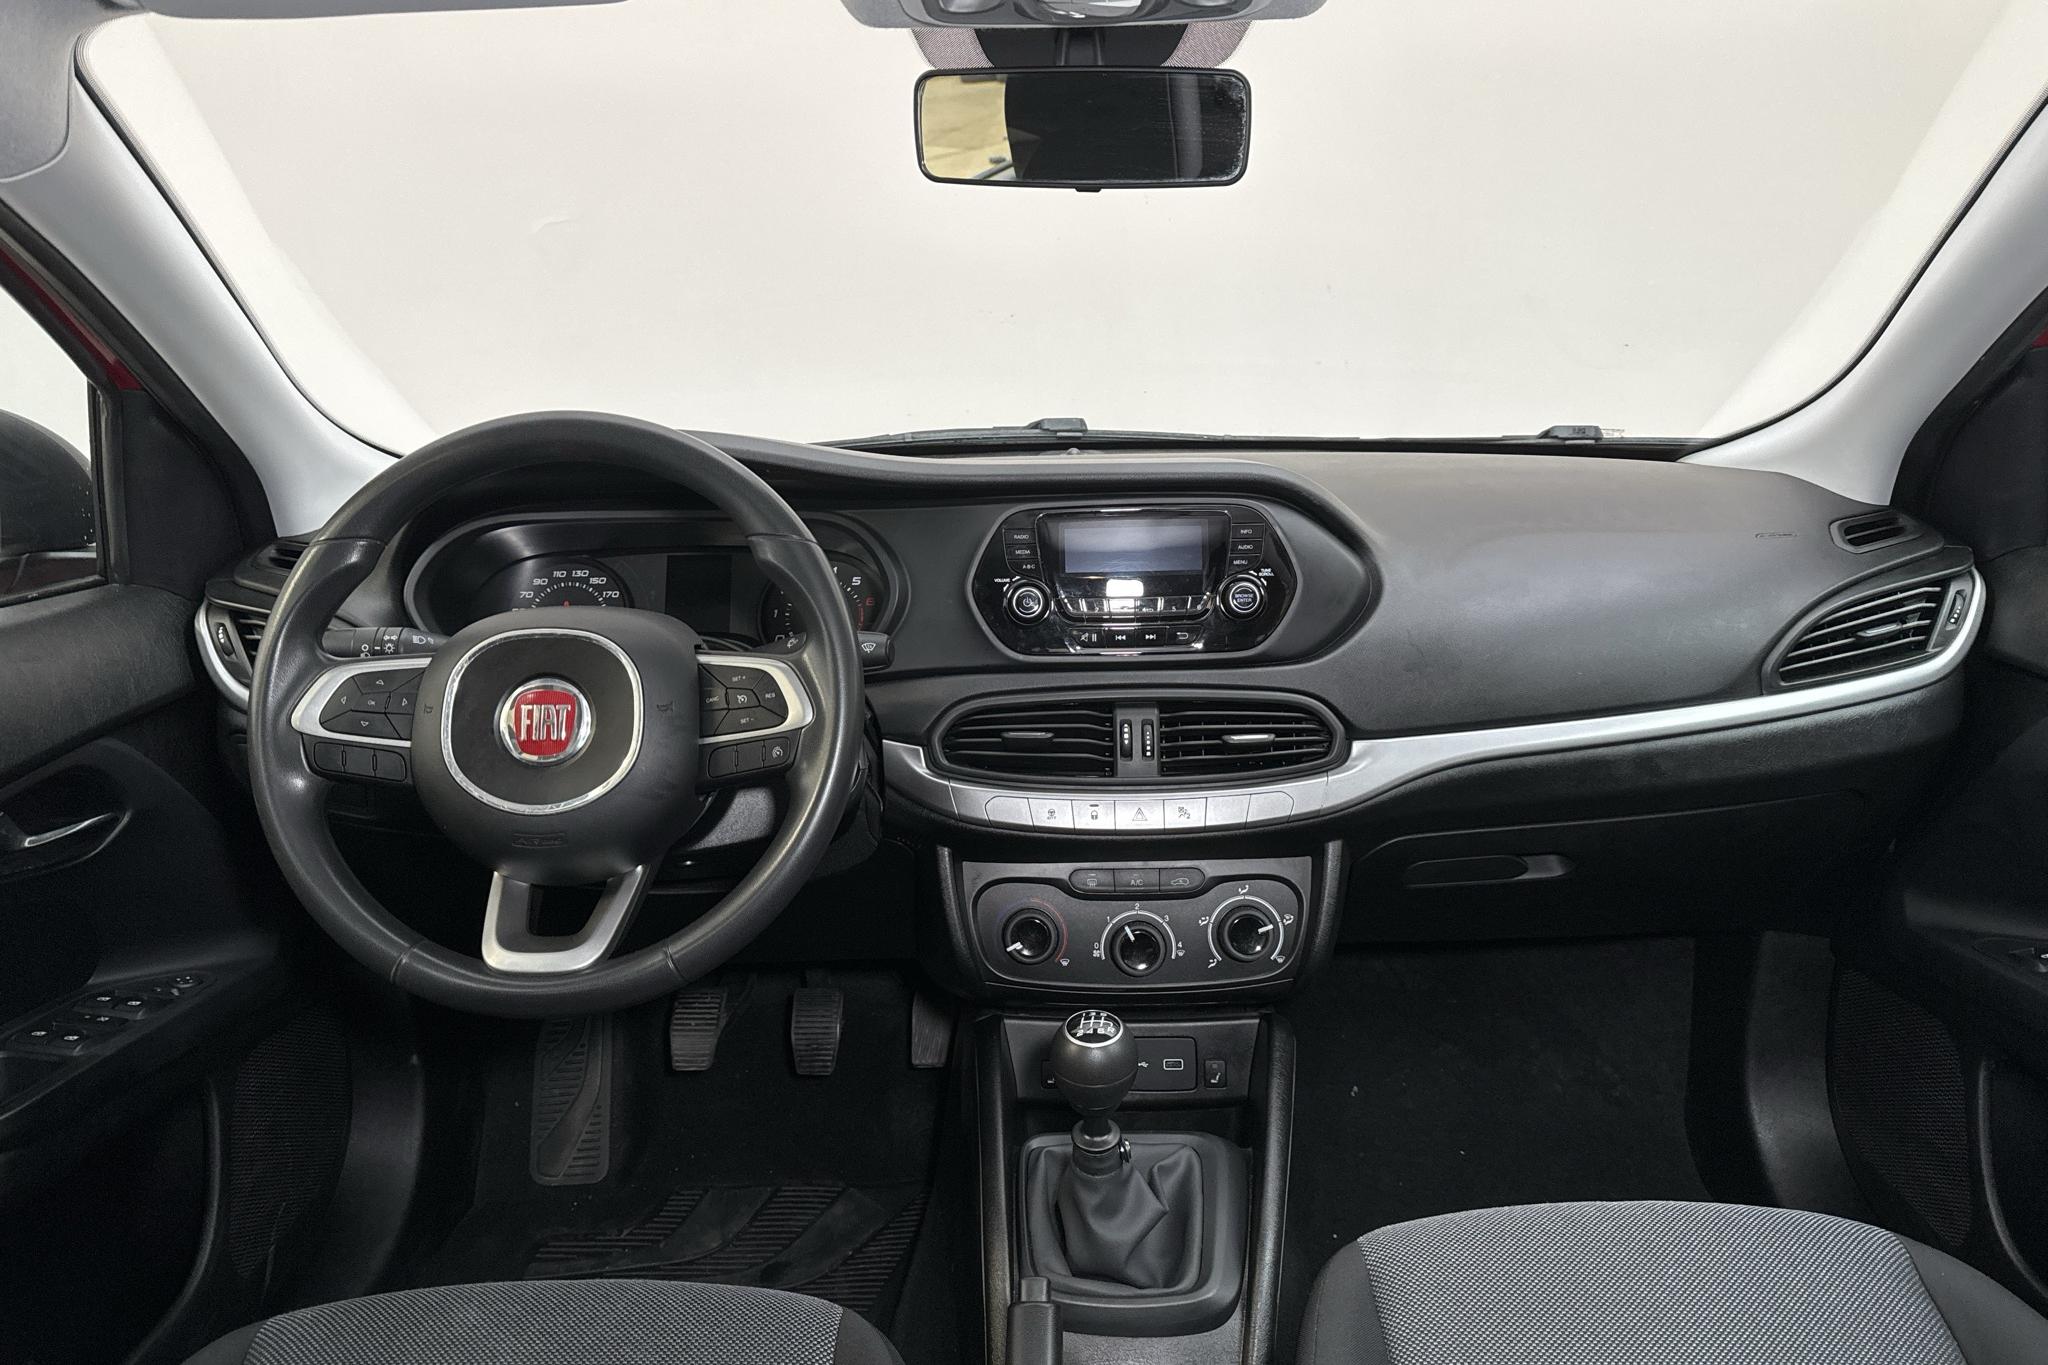 Fiat Tipo 1.4 5dr (95hk) - 3 151 mil - Manuell - röd - 2019